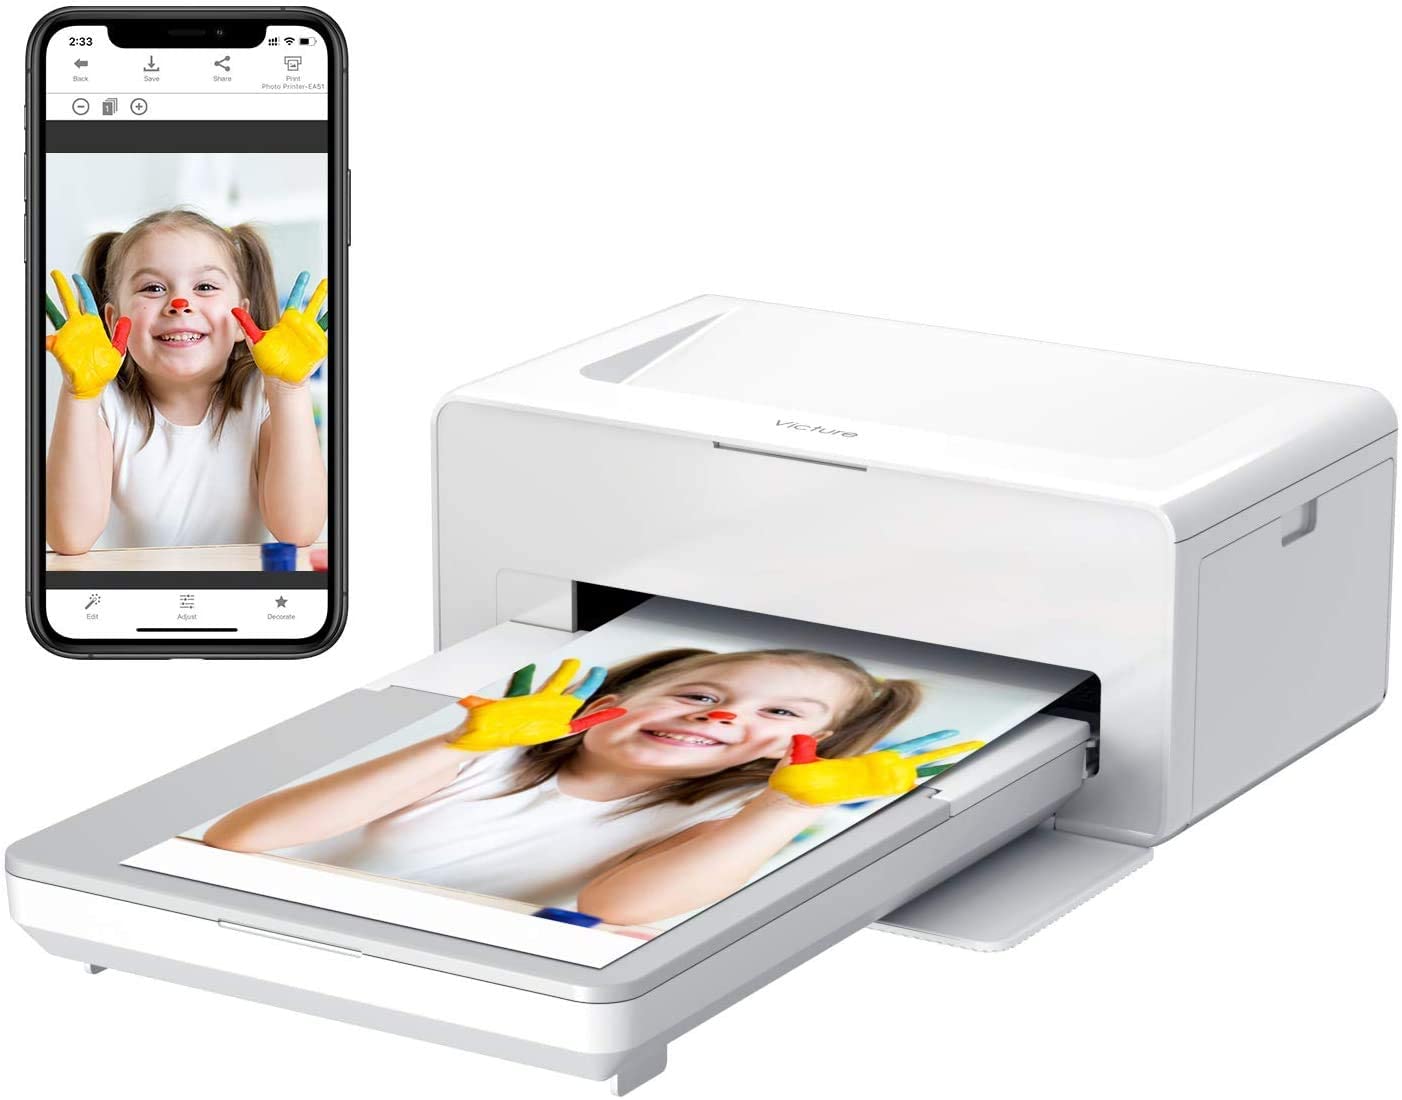 Victure Photo Printer printer reviews uk